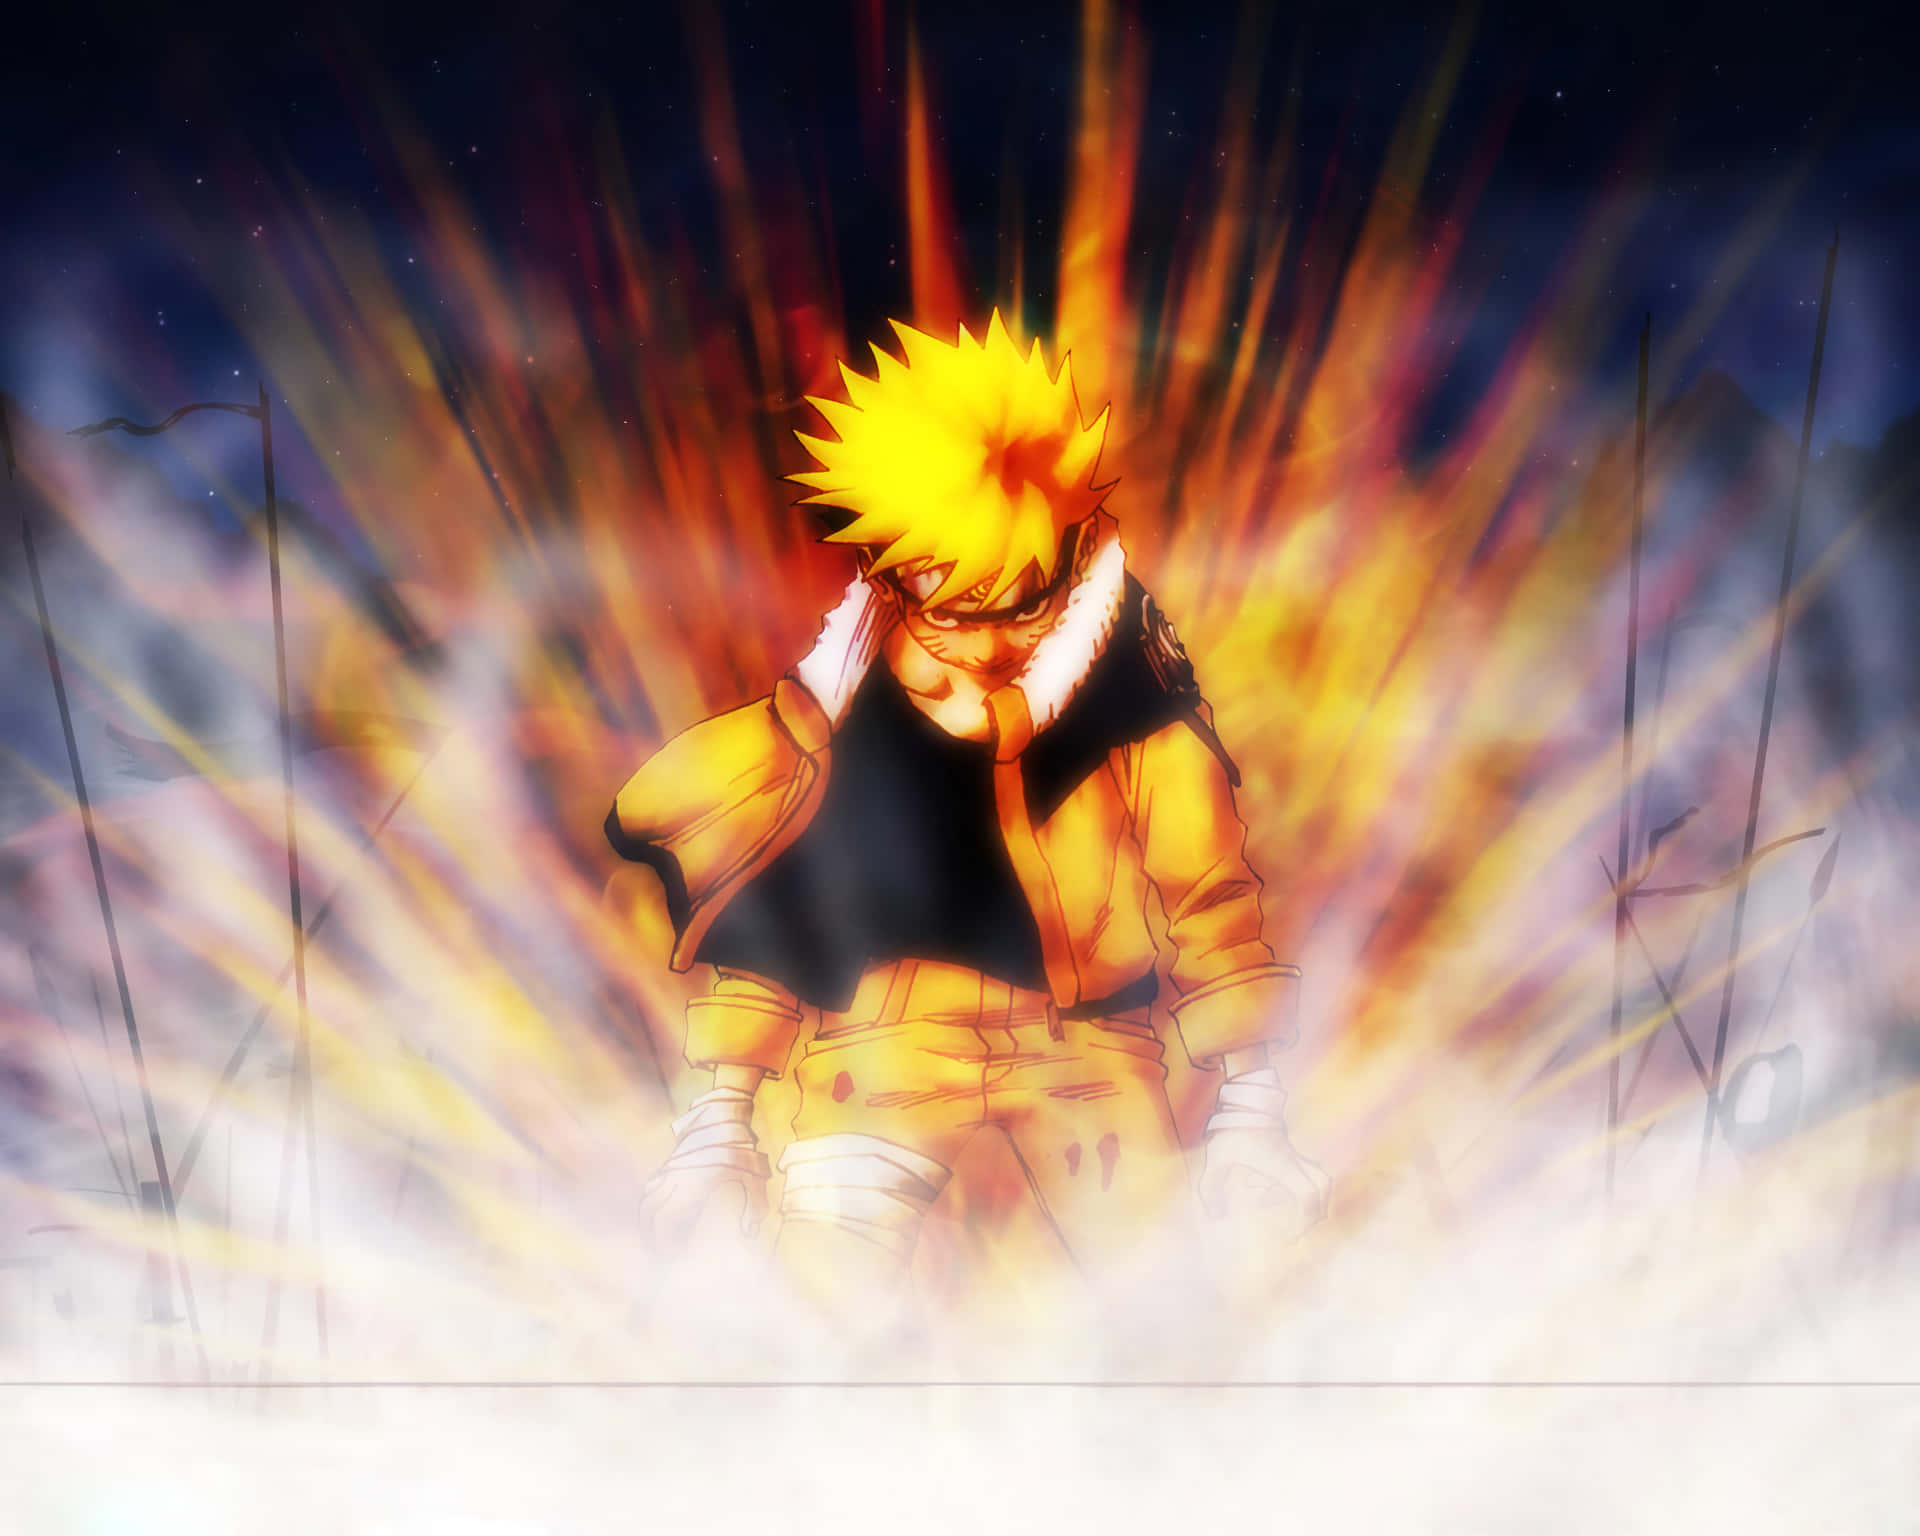 Narutobakgrundsbilder - Naruto Bakgrundsbilder. Wallpaper